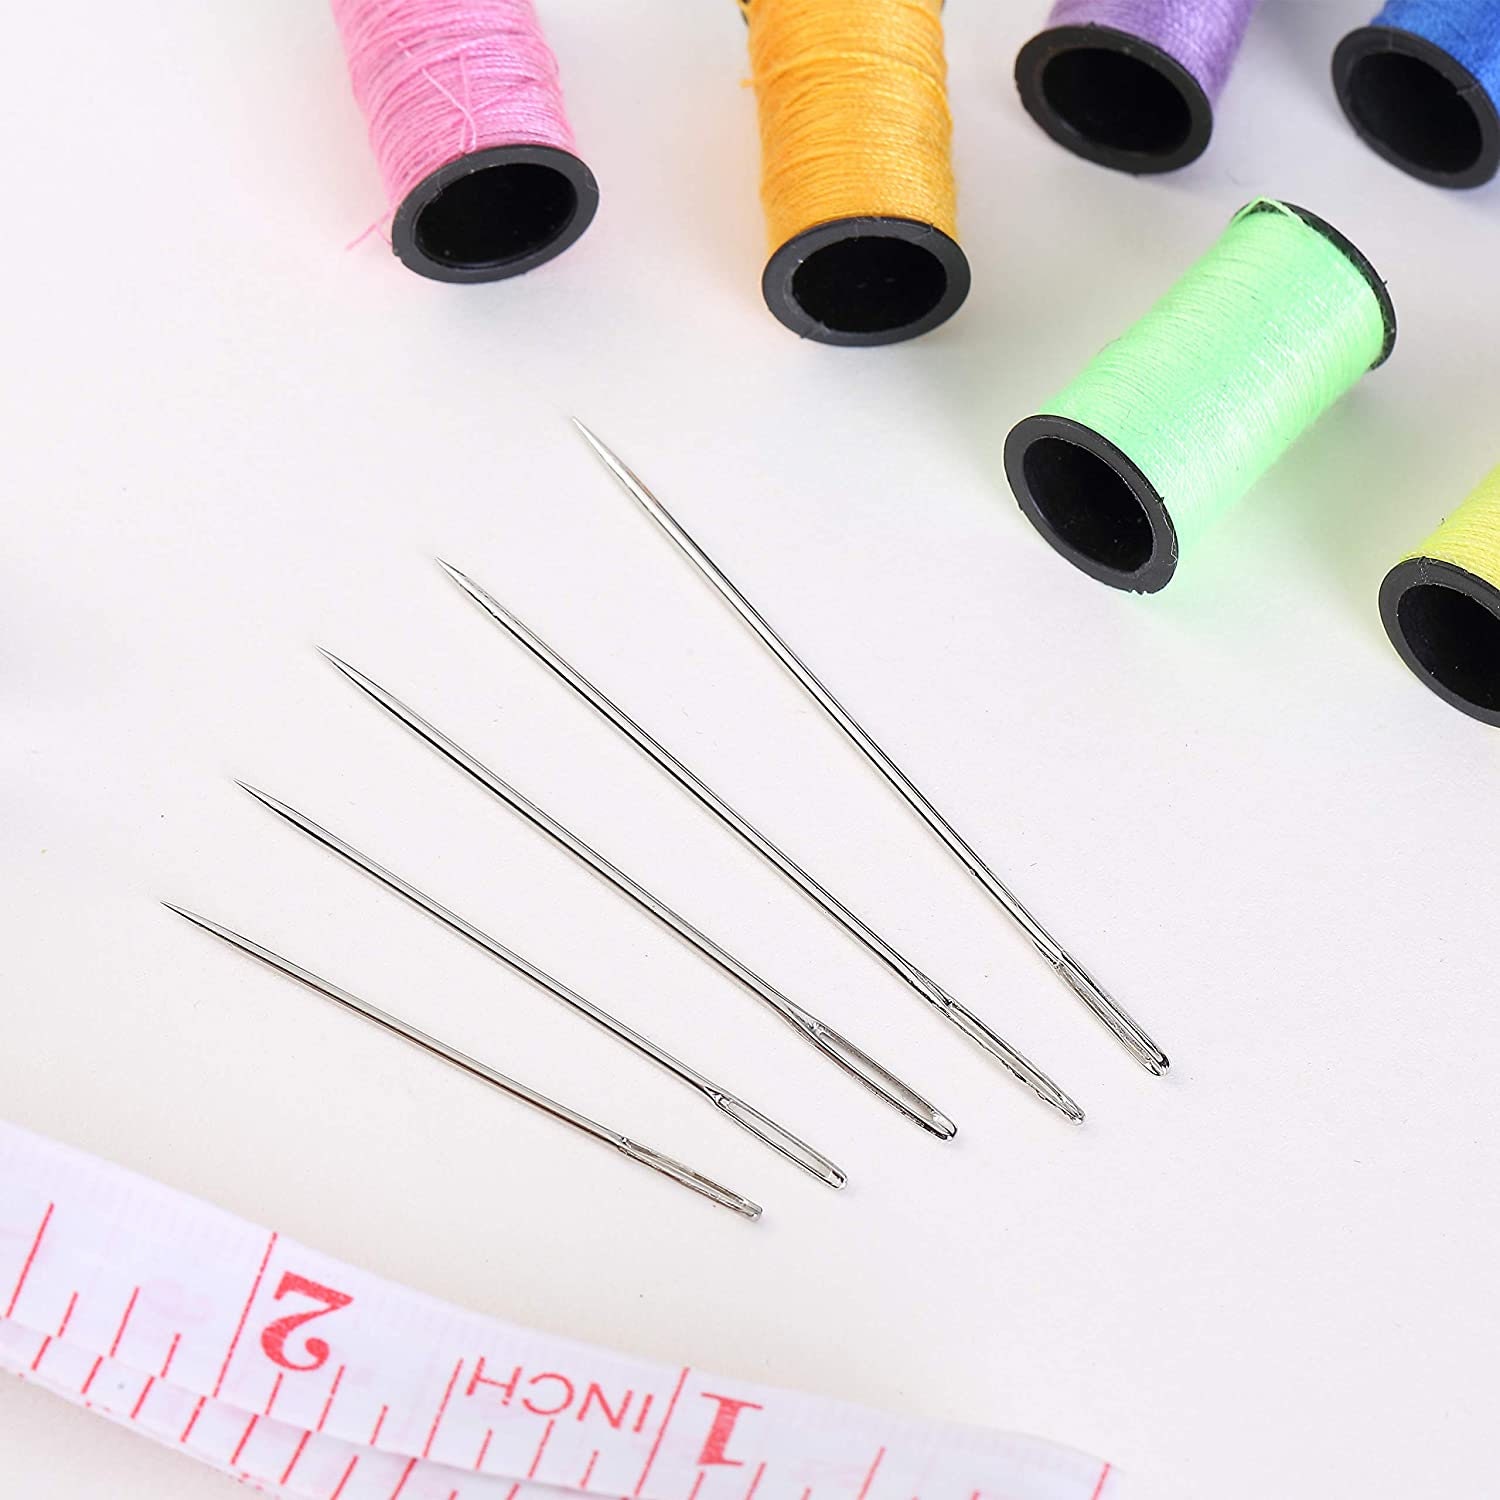 Large-Eye Needles for Hand Sewing, 50pcs Premium Large Eye Sewing